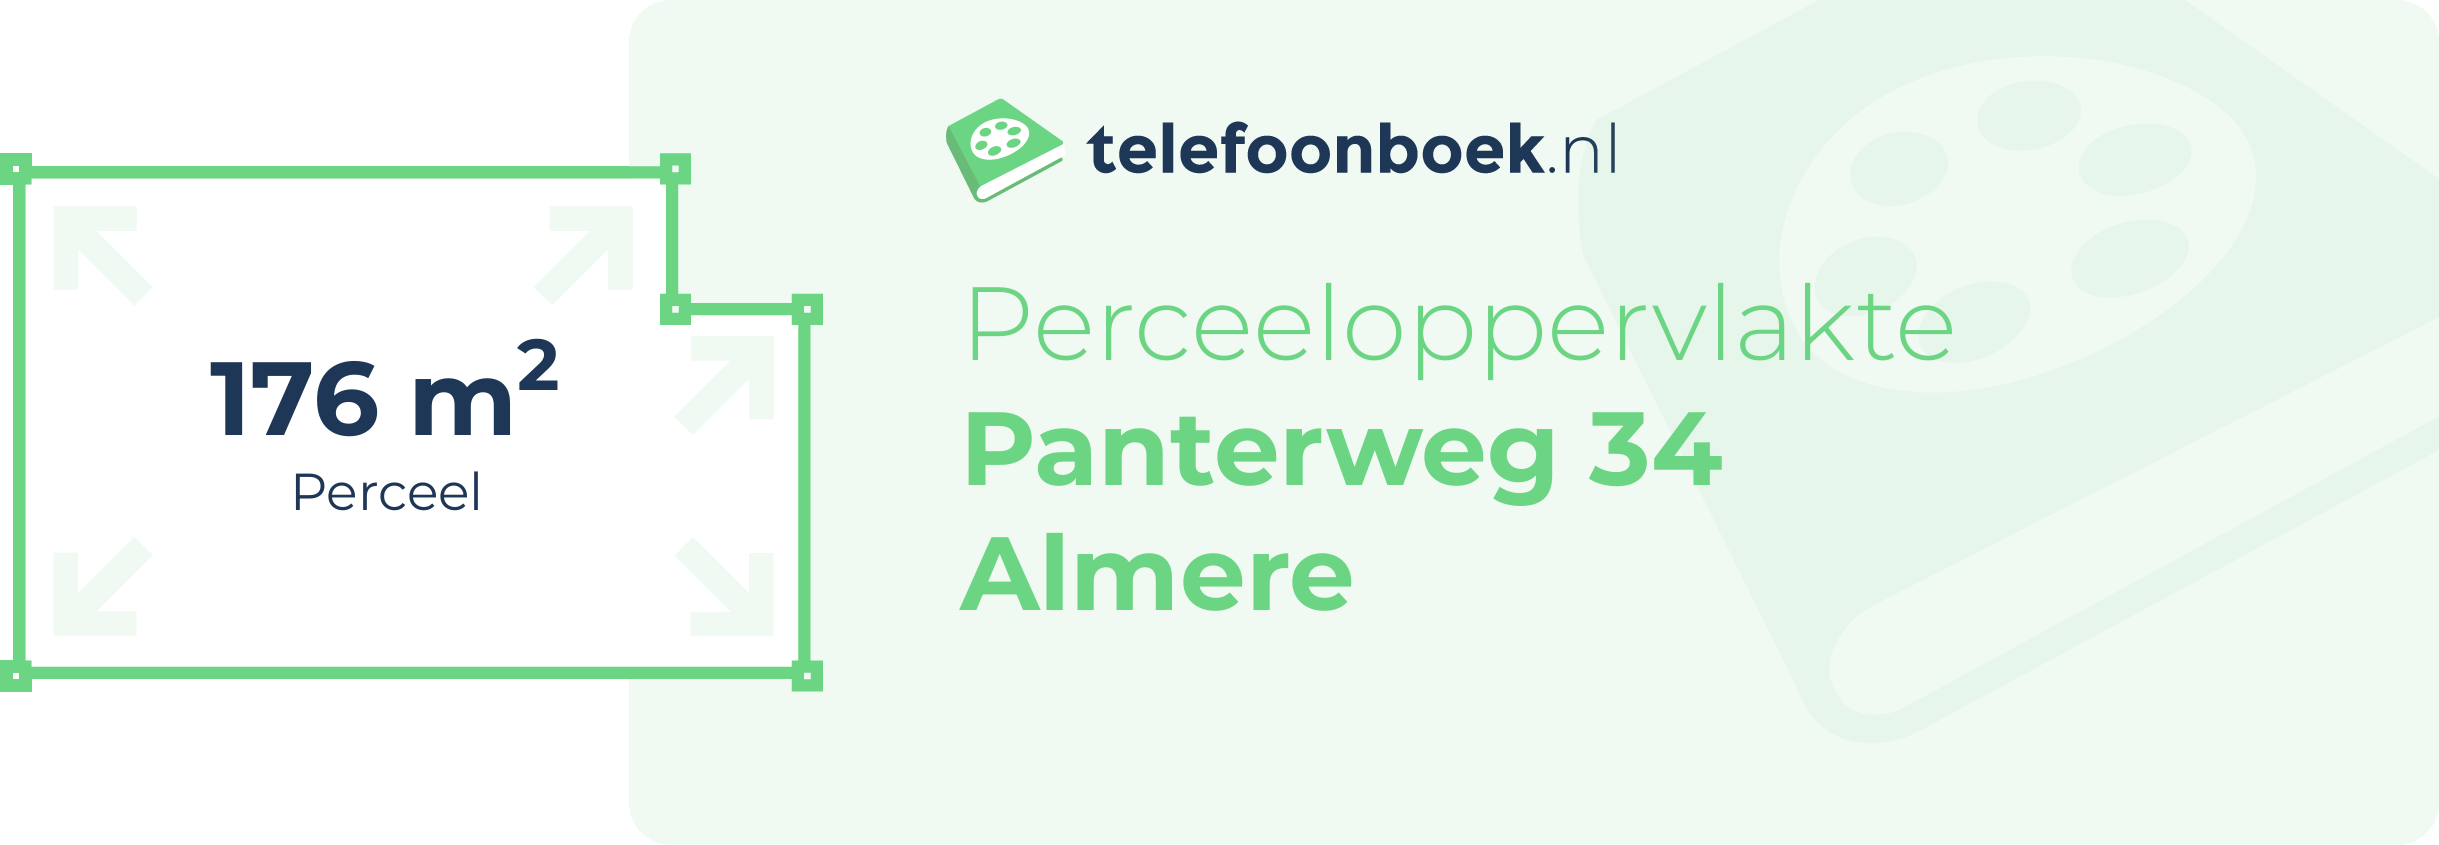 Perceeloppervlakte Panterweg 34 Almere